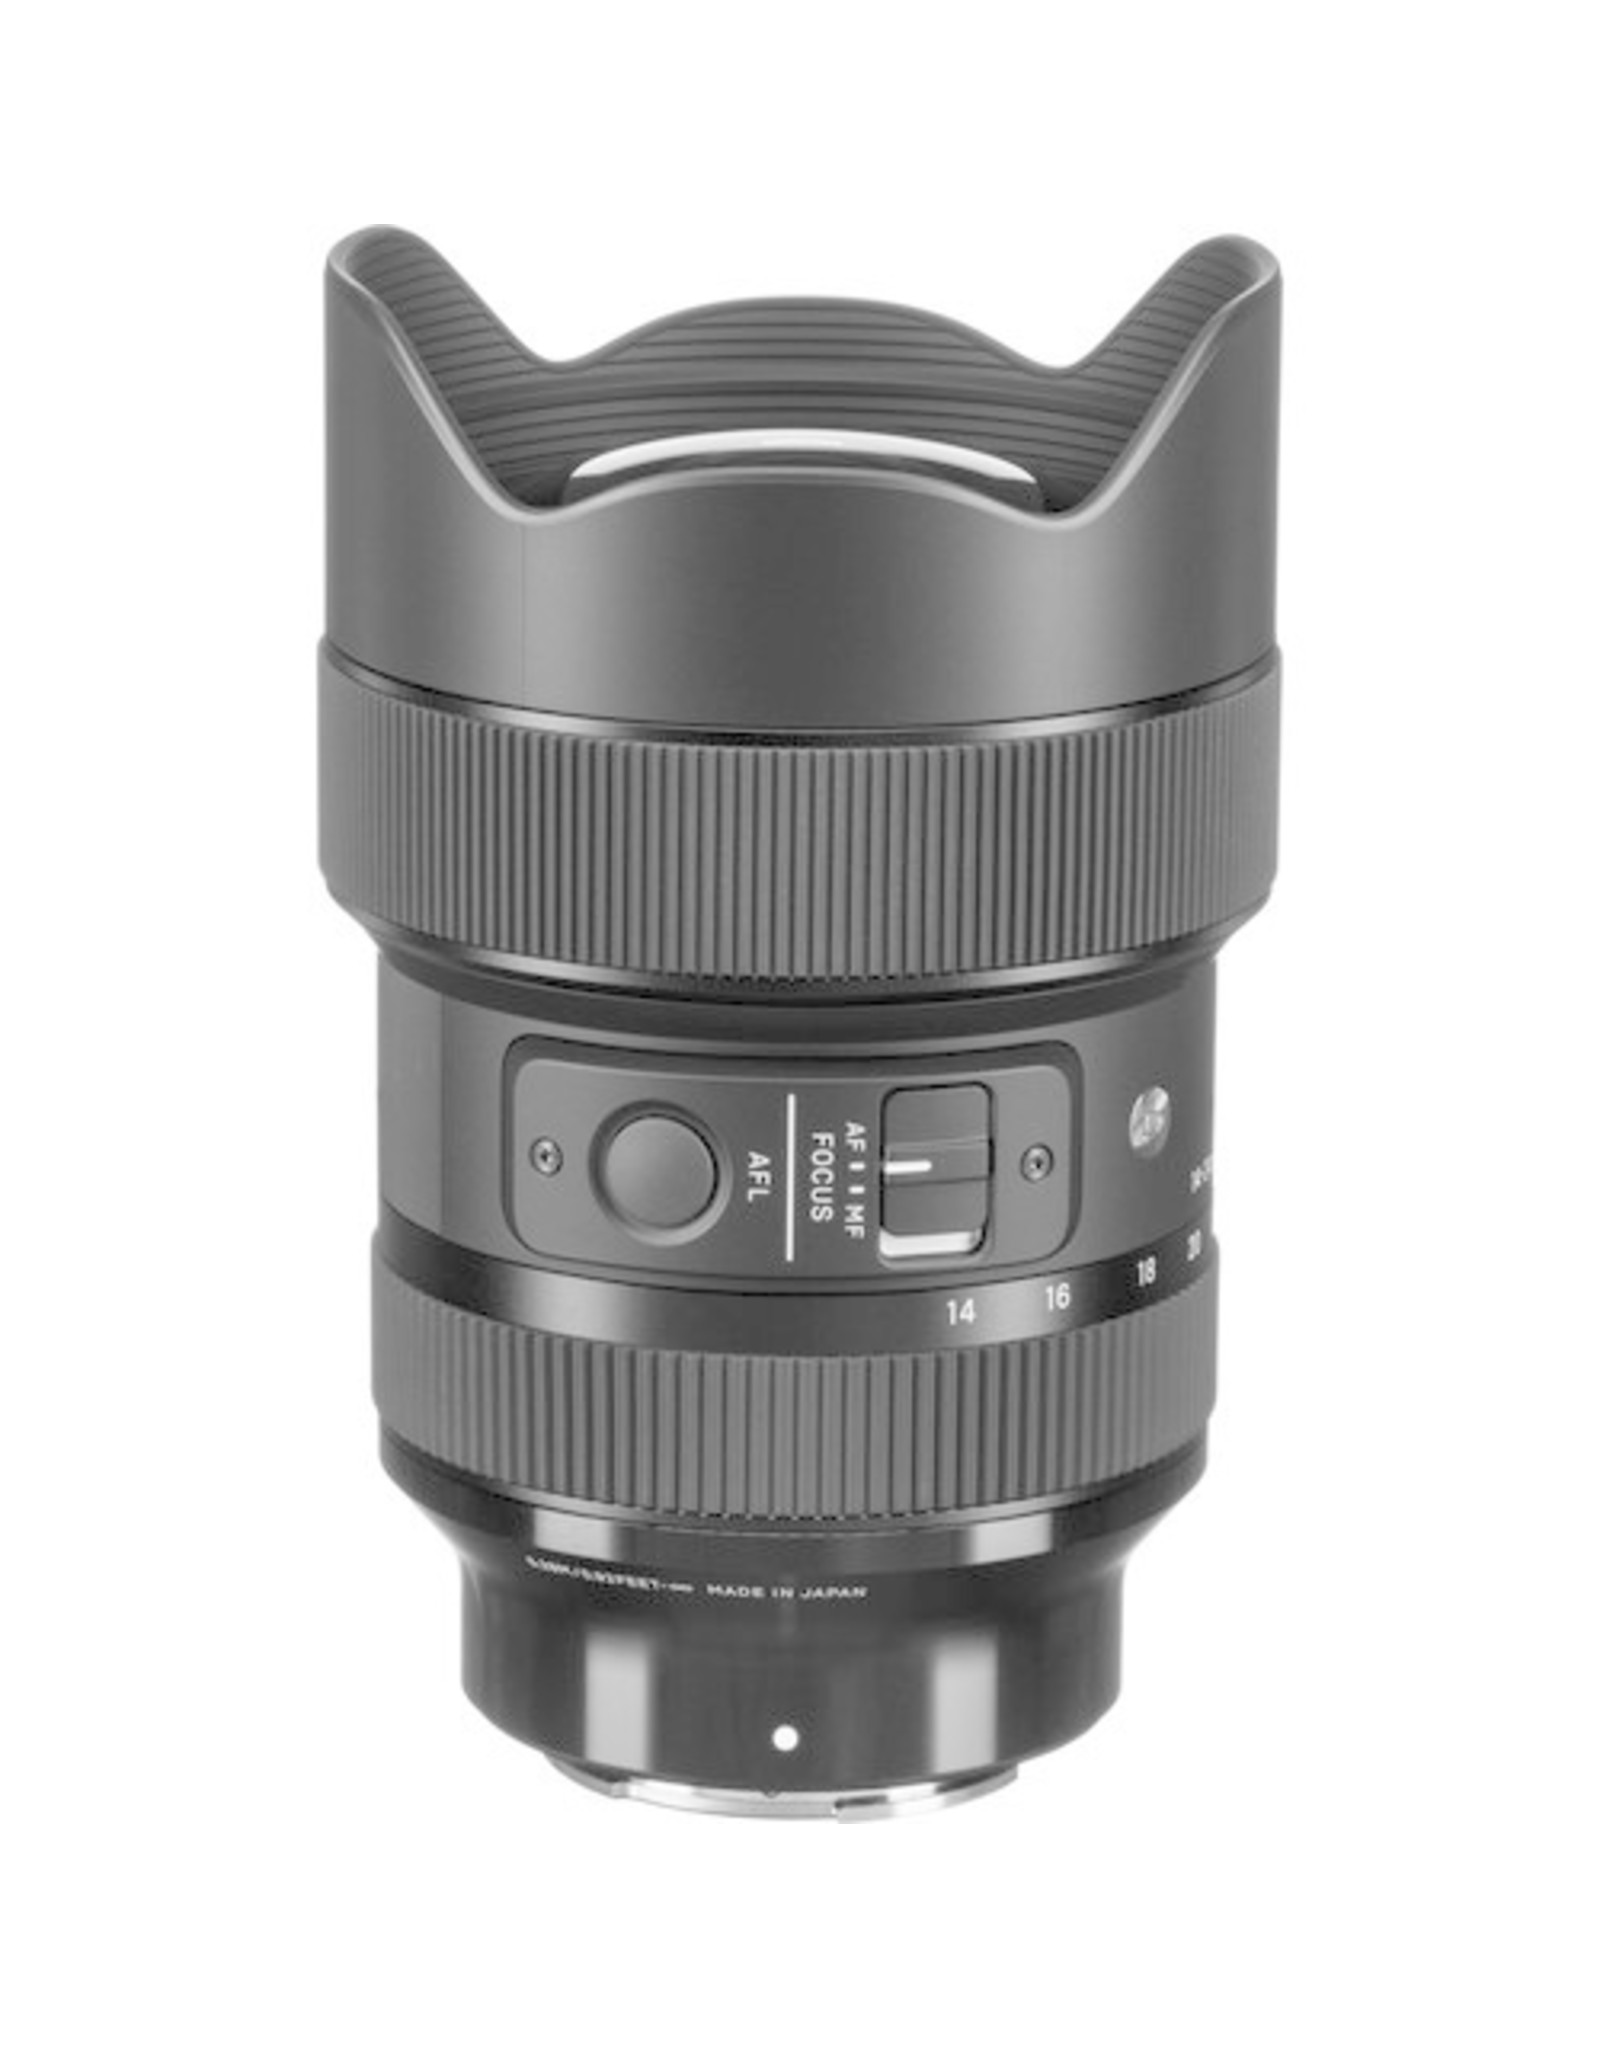 Sigma Sigma 14-24mm f/2.8 DG DN Art Lens (Specify Mount Type)